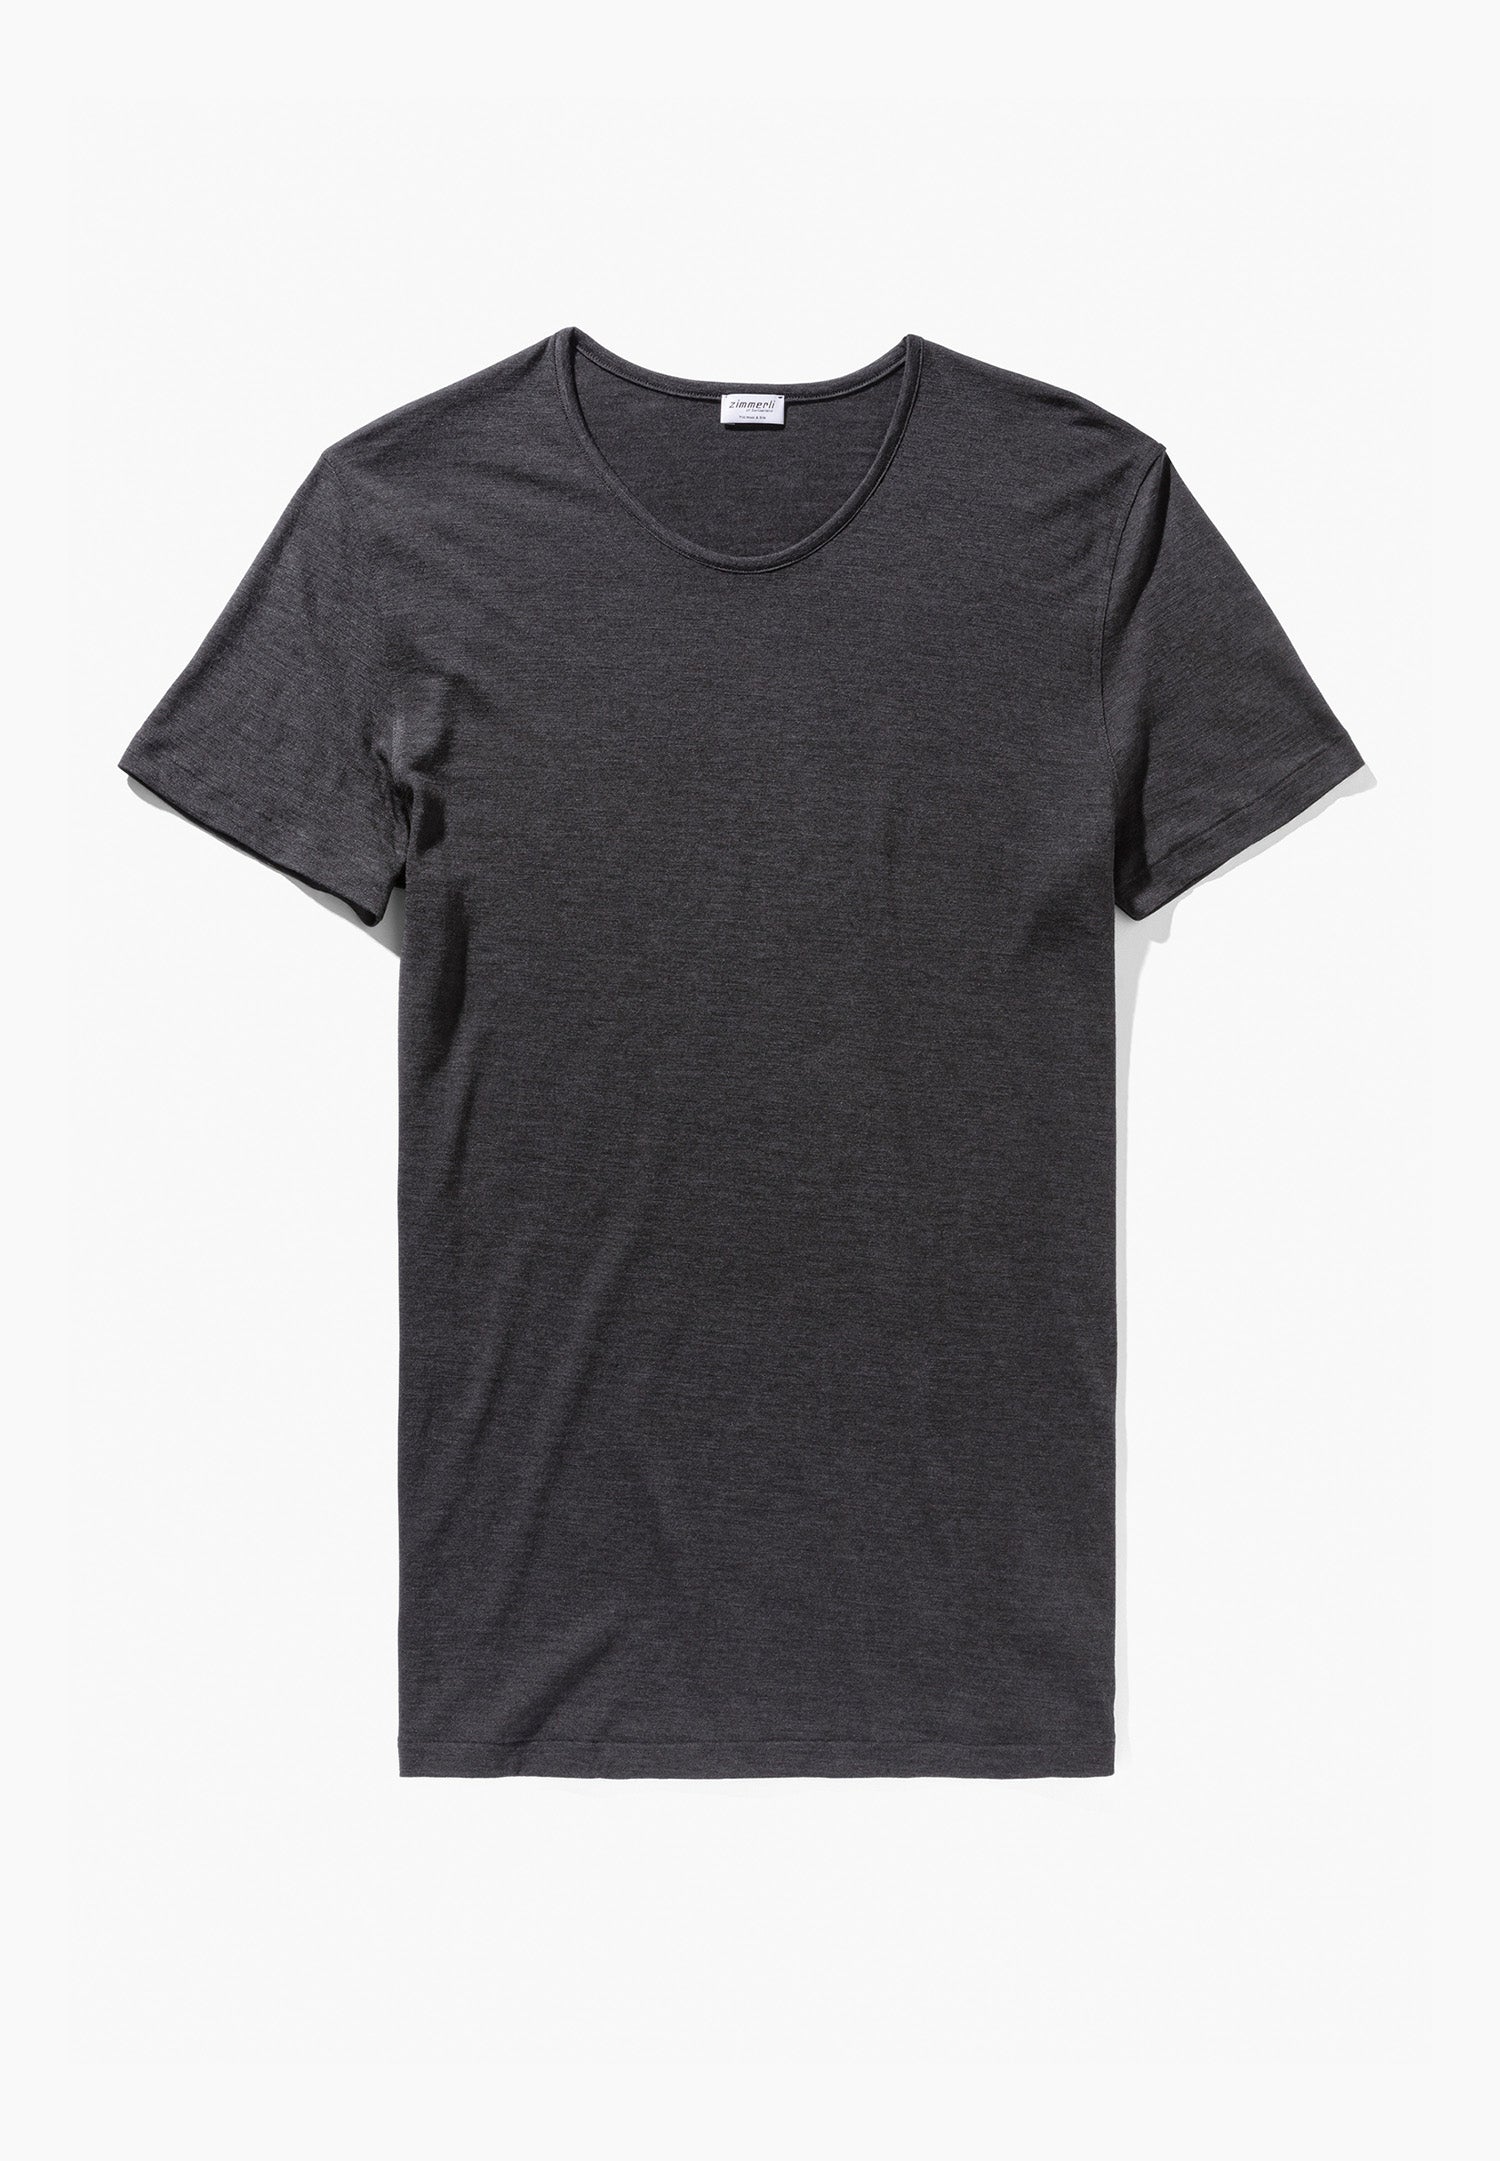 Wool & Silk | T-Shirt Short Sleeve - charcoal - Zimmerli of ...